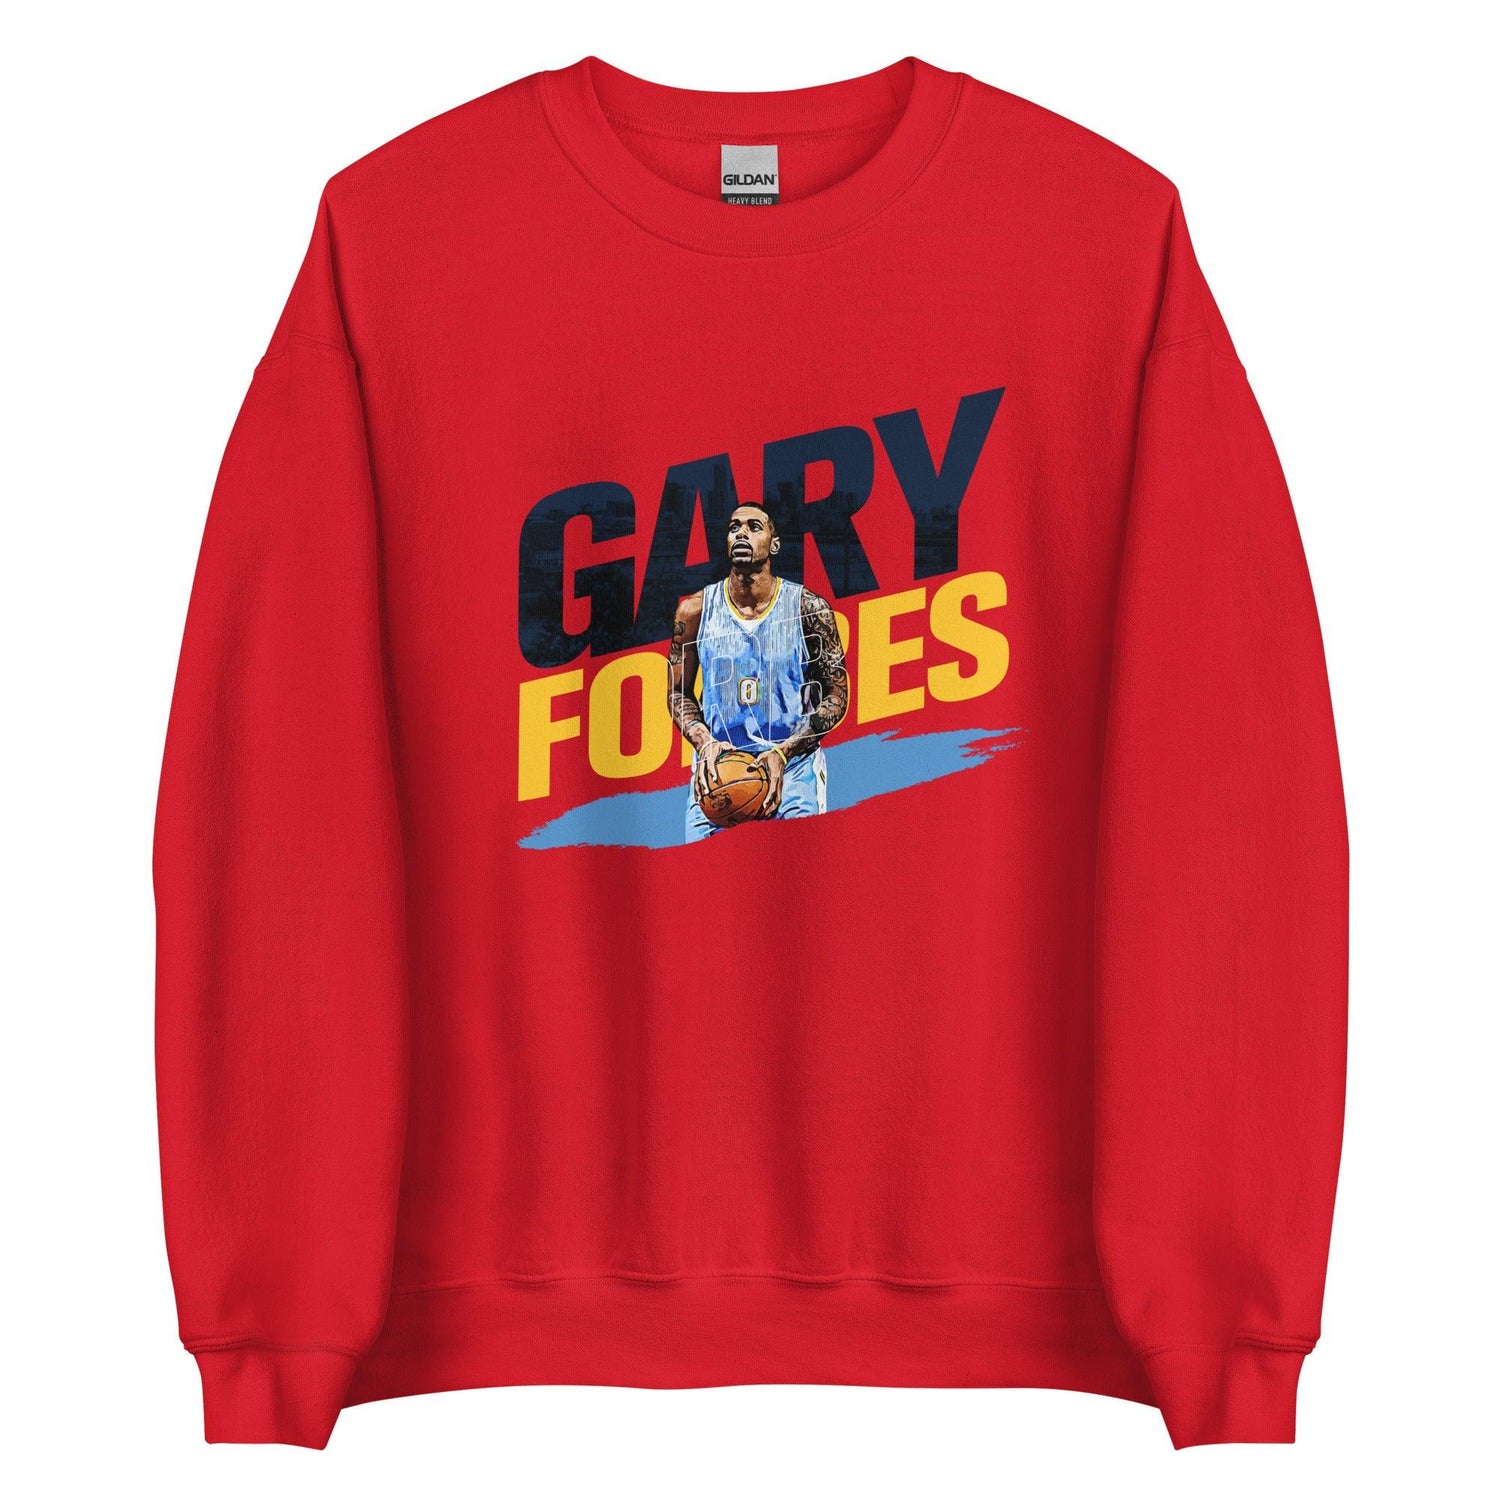 Gary Forbes "Gameday" Sweatshirt - Fan Arch